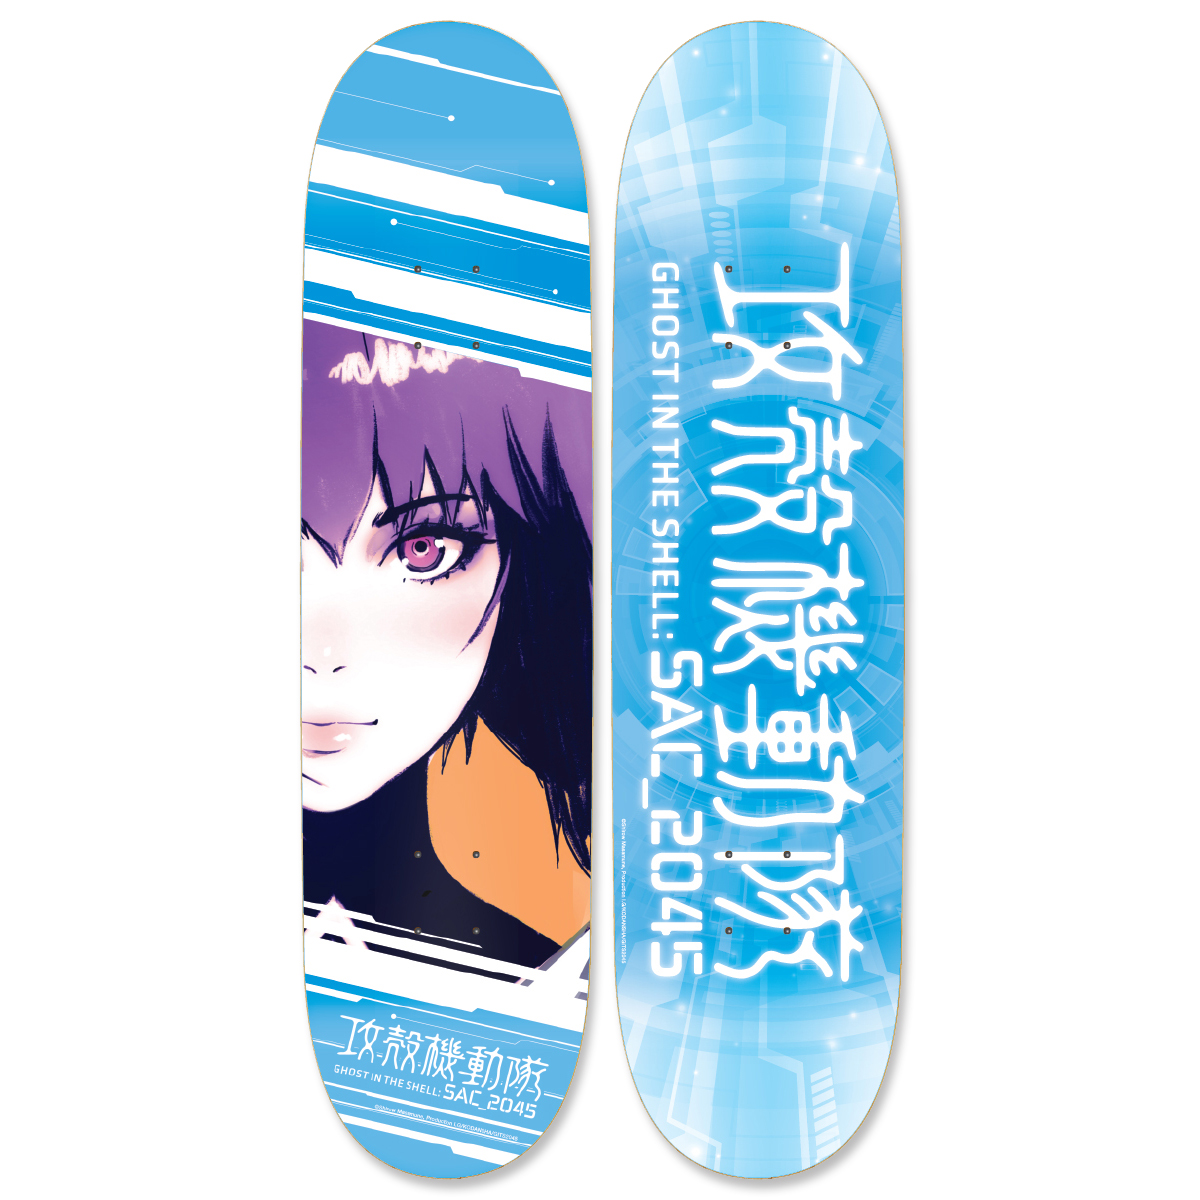 GHOST IN THE SHELL: SAC_2045 Motoko Kusanagi Skateboard Deck [February 2022 Delivery]